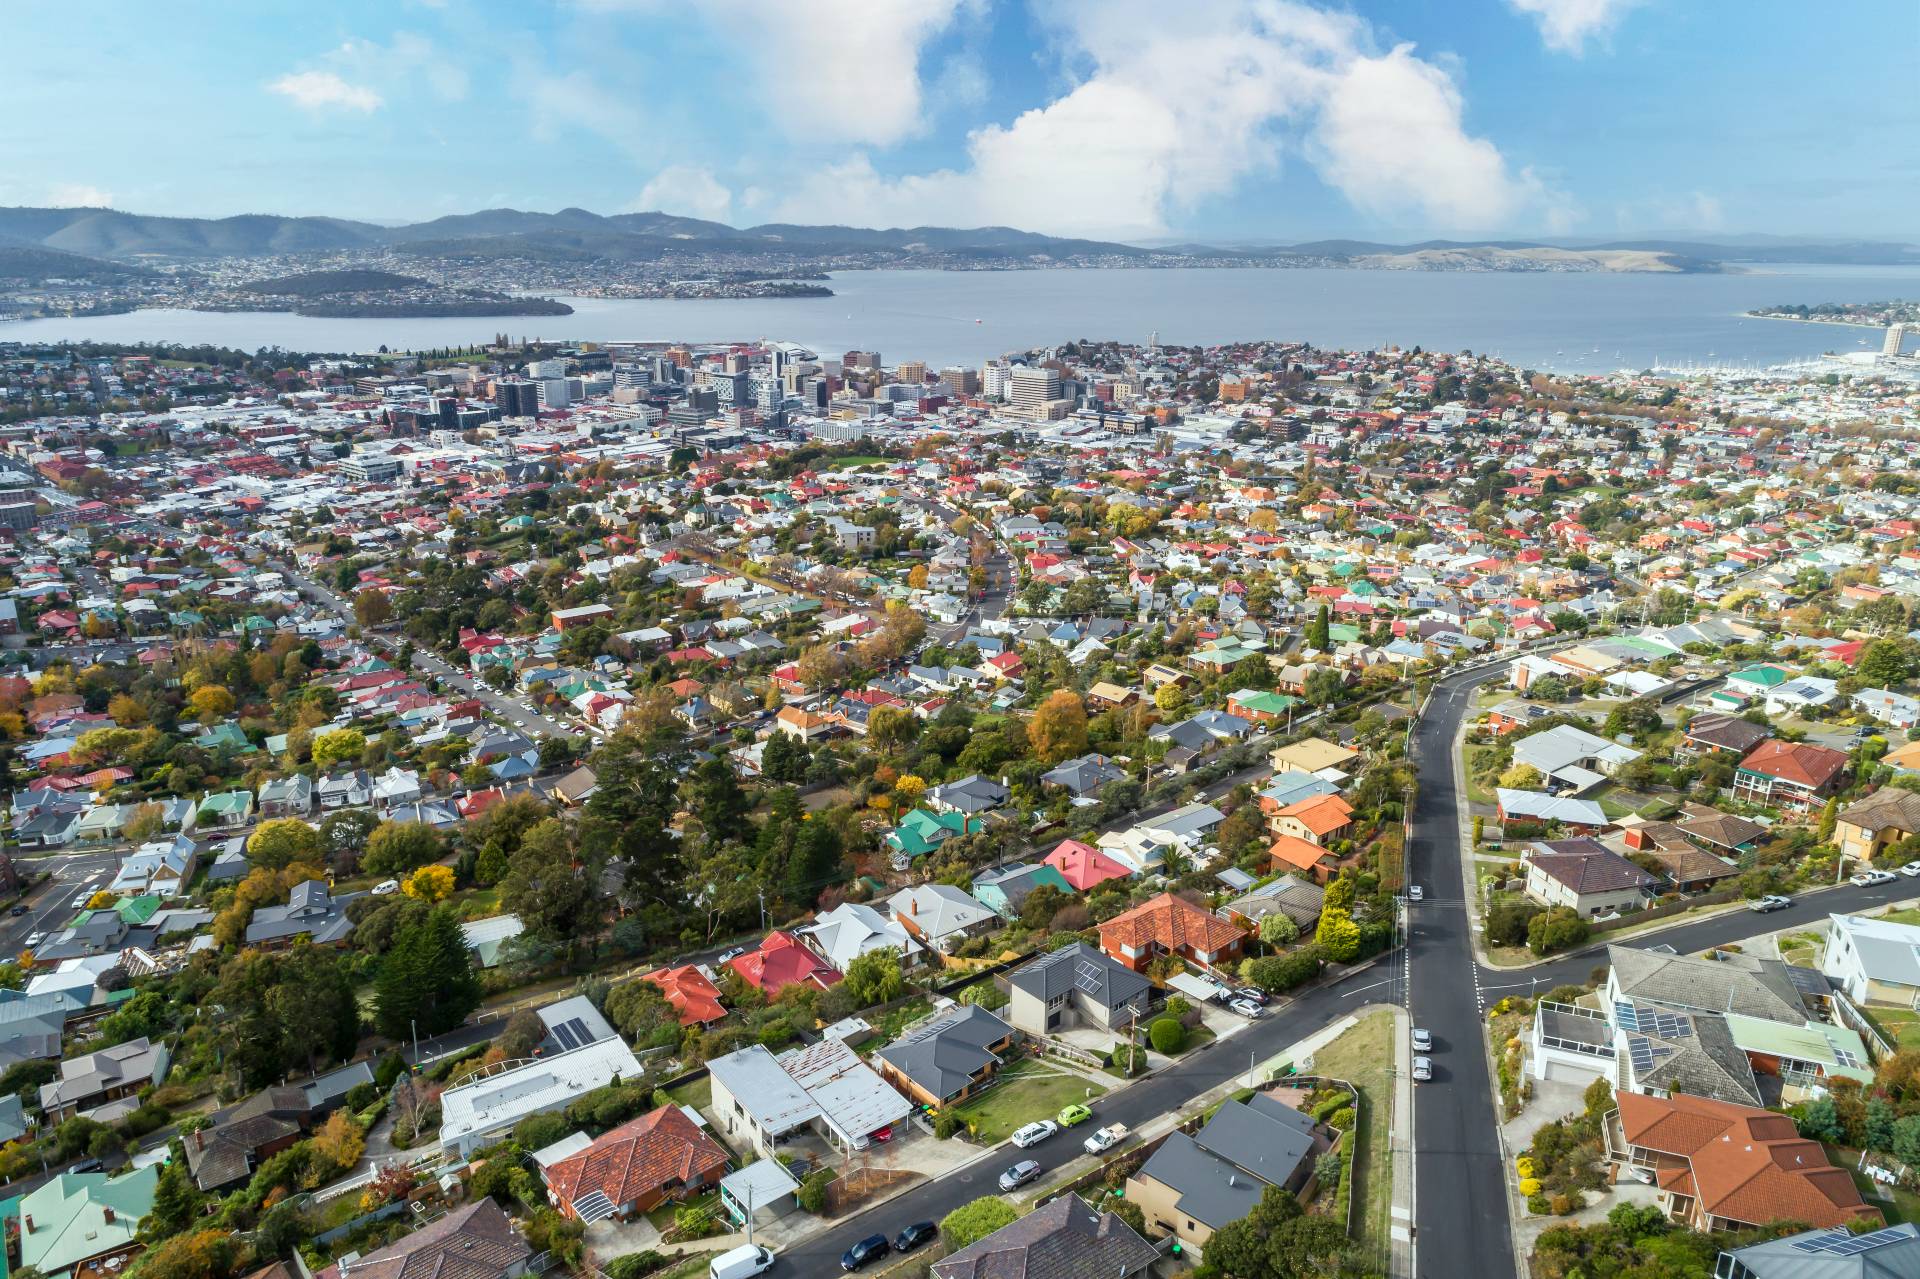 An image overlooking West Hobart, Tasmania